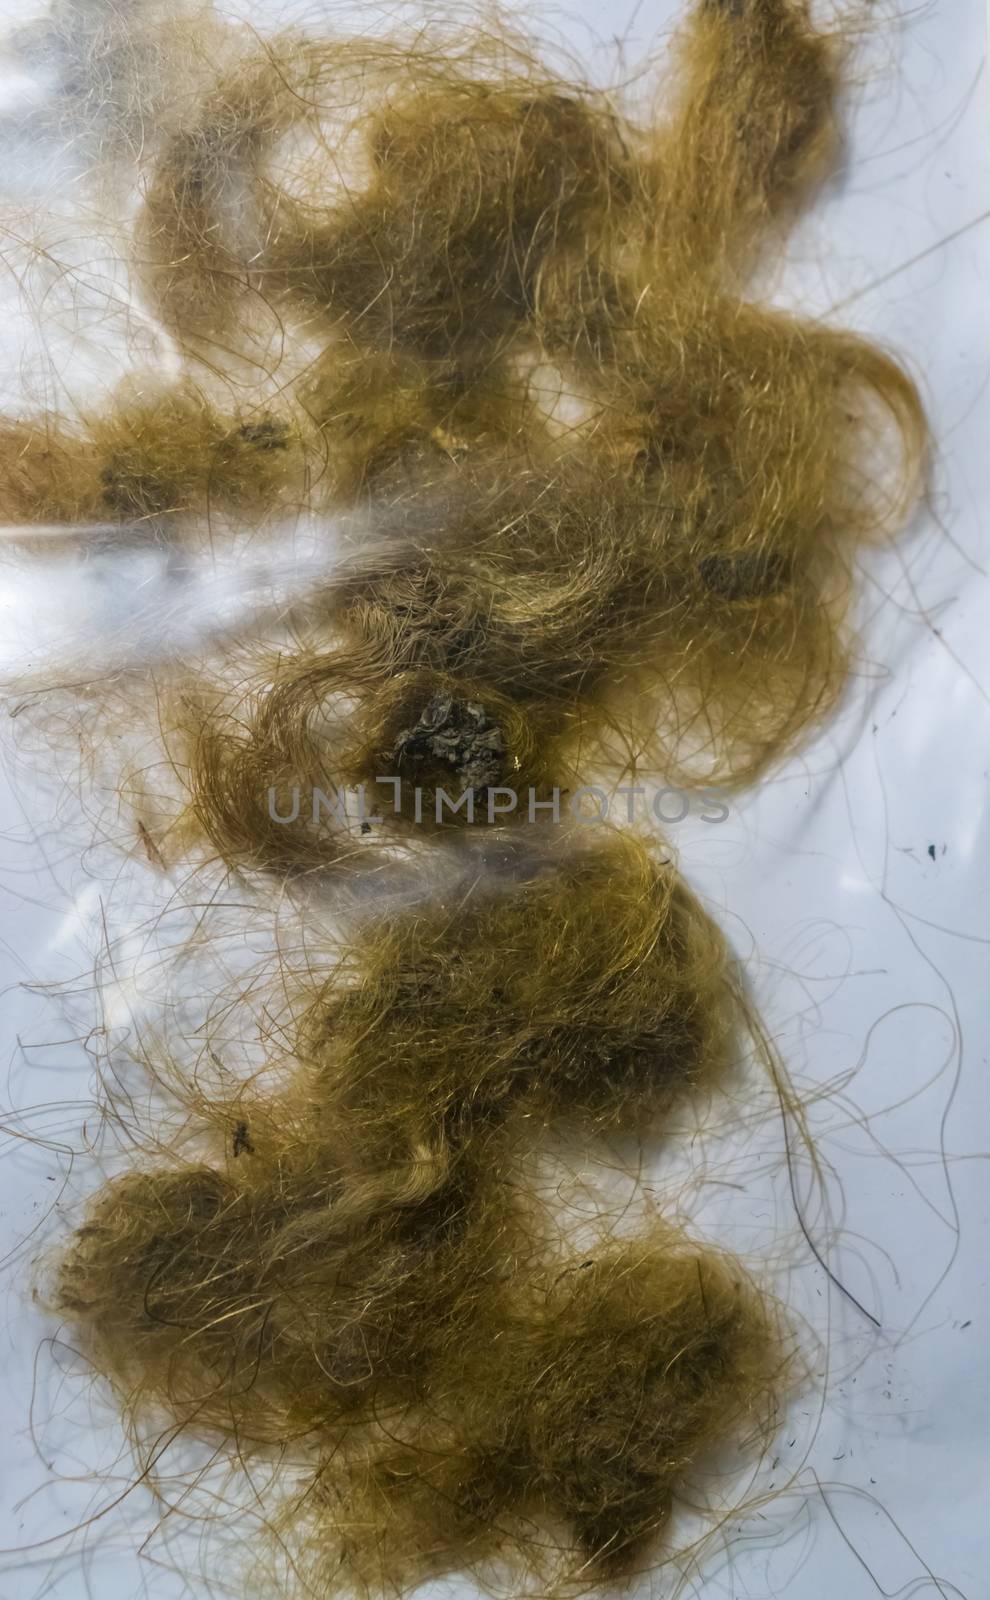 woolly mammoth hair locks, remains of a extinct animal from the epoch era by charlottebleijenberg